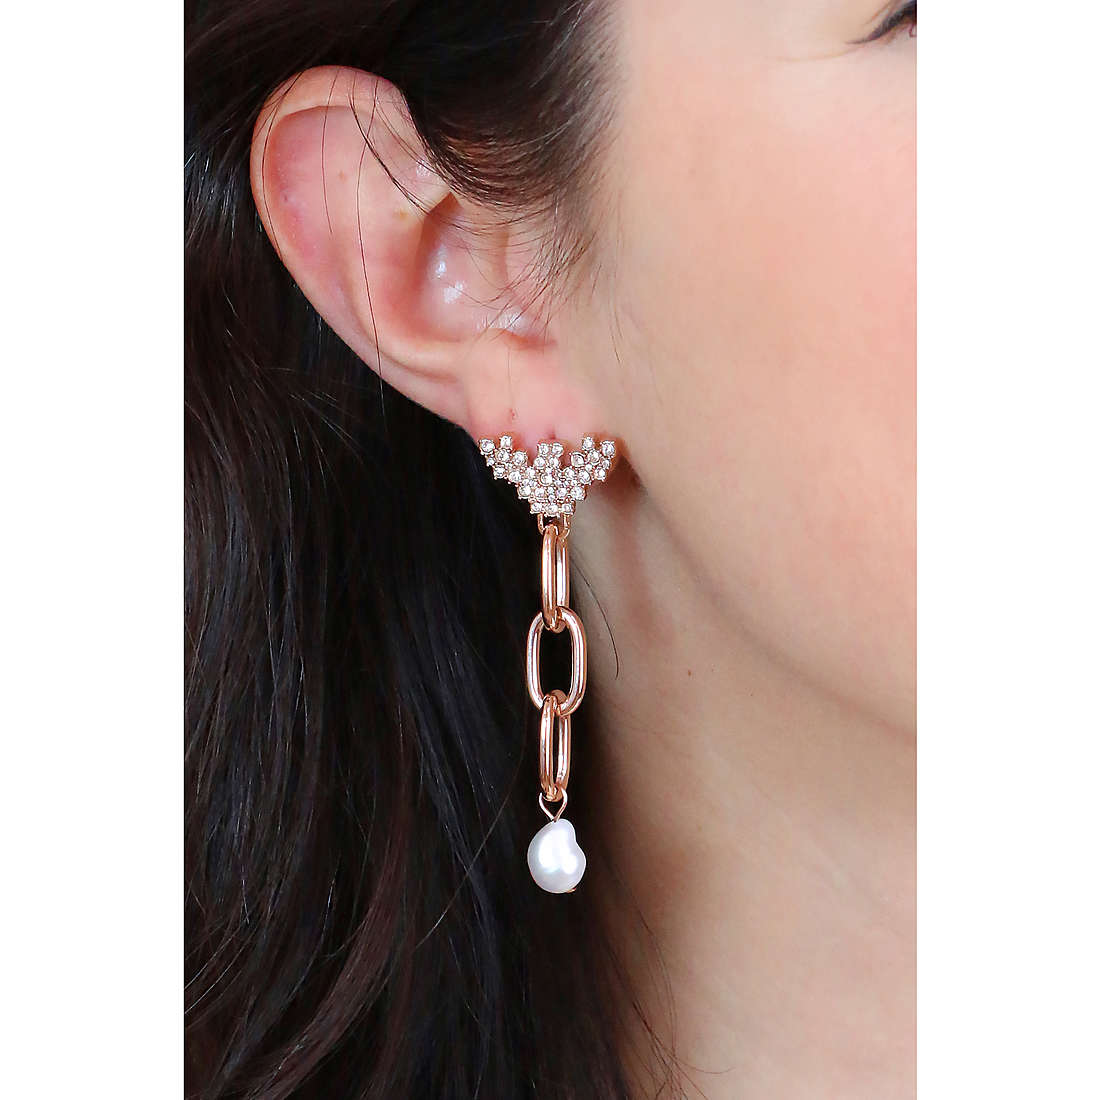 Emporio Armani earrings Iconic woman EGS2964221 wearing